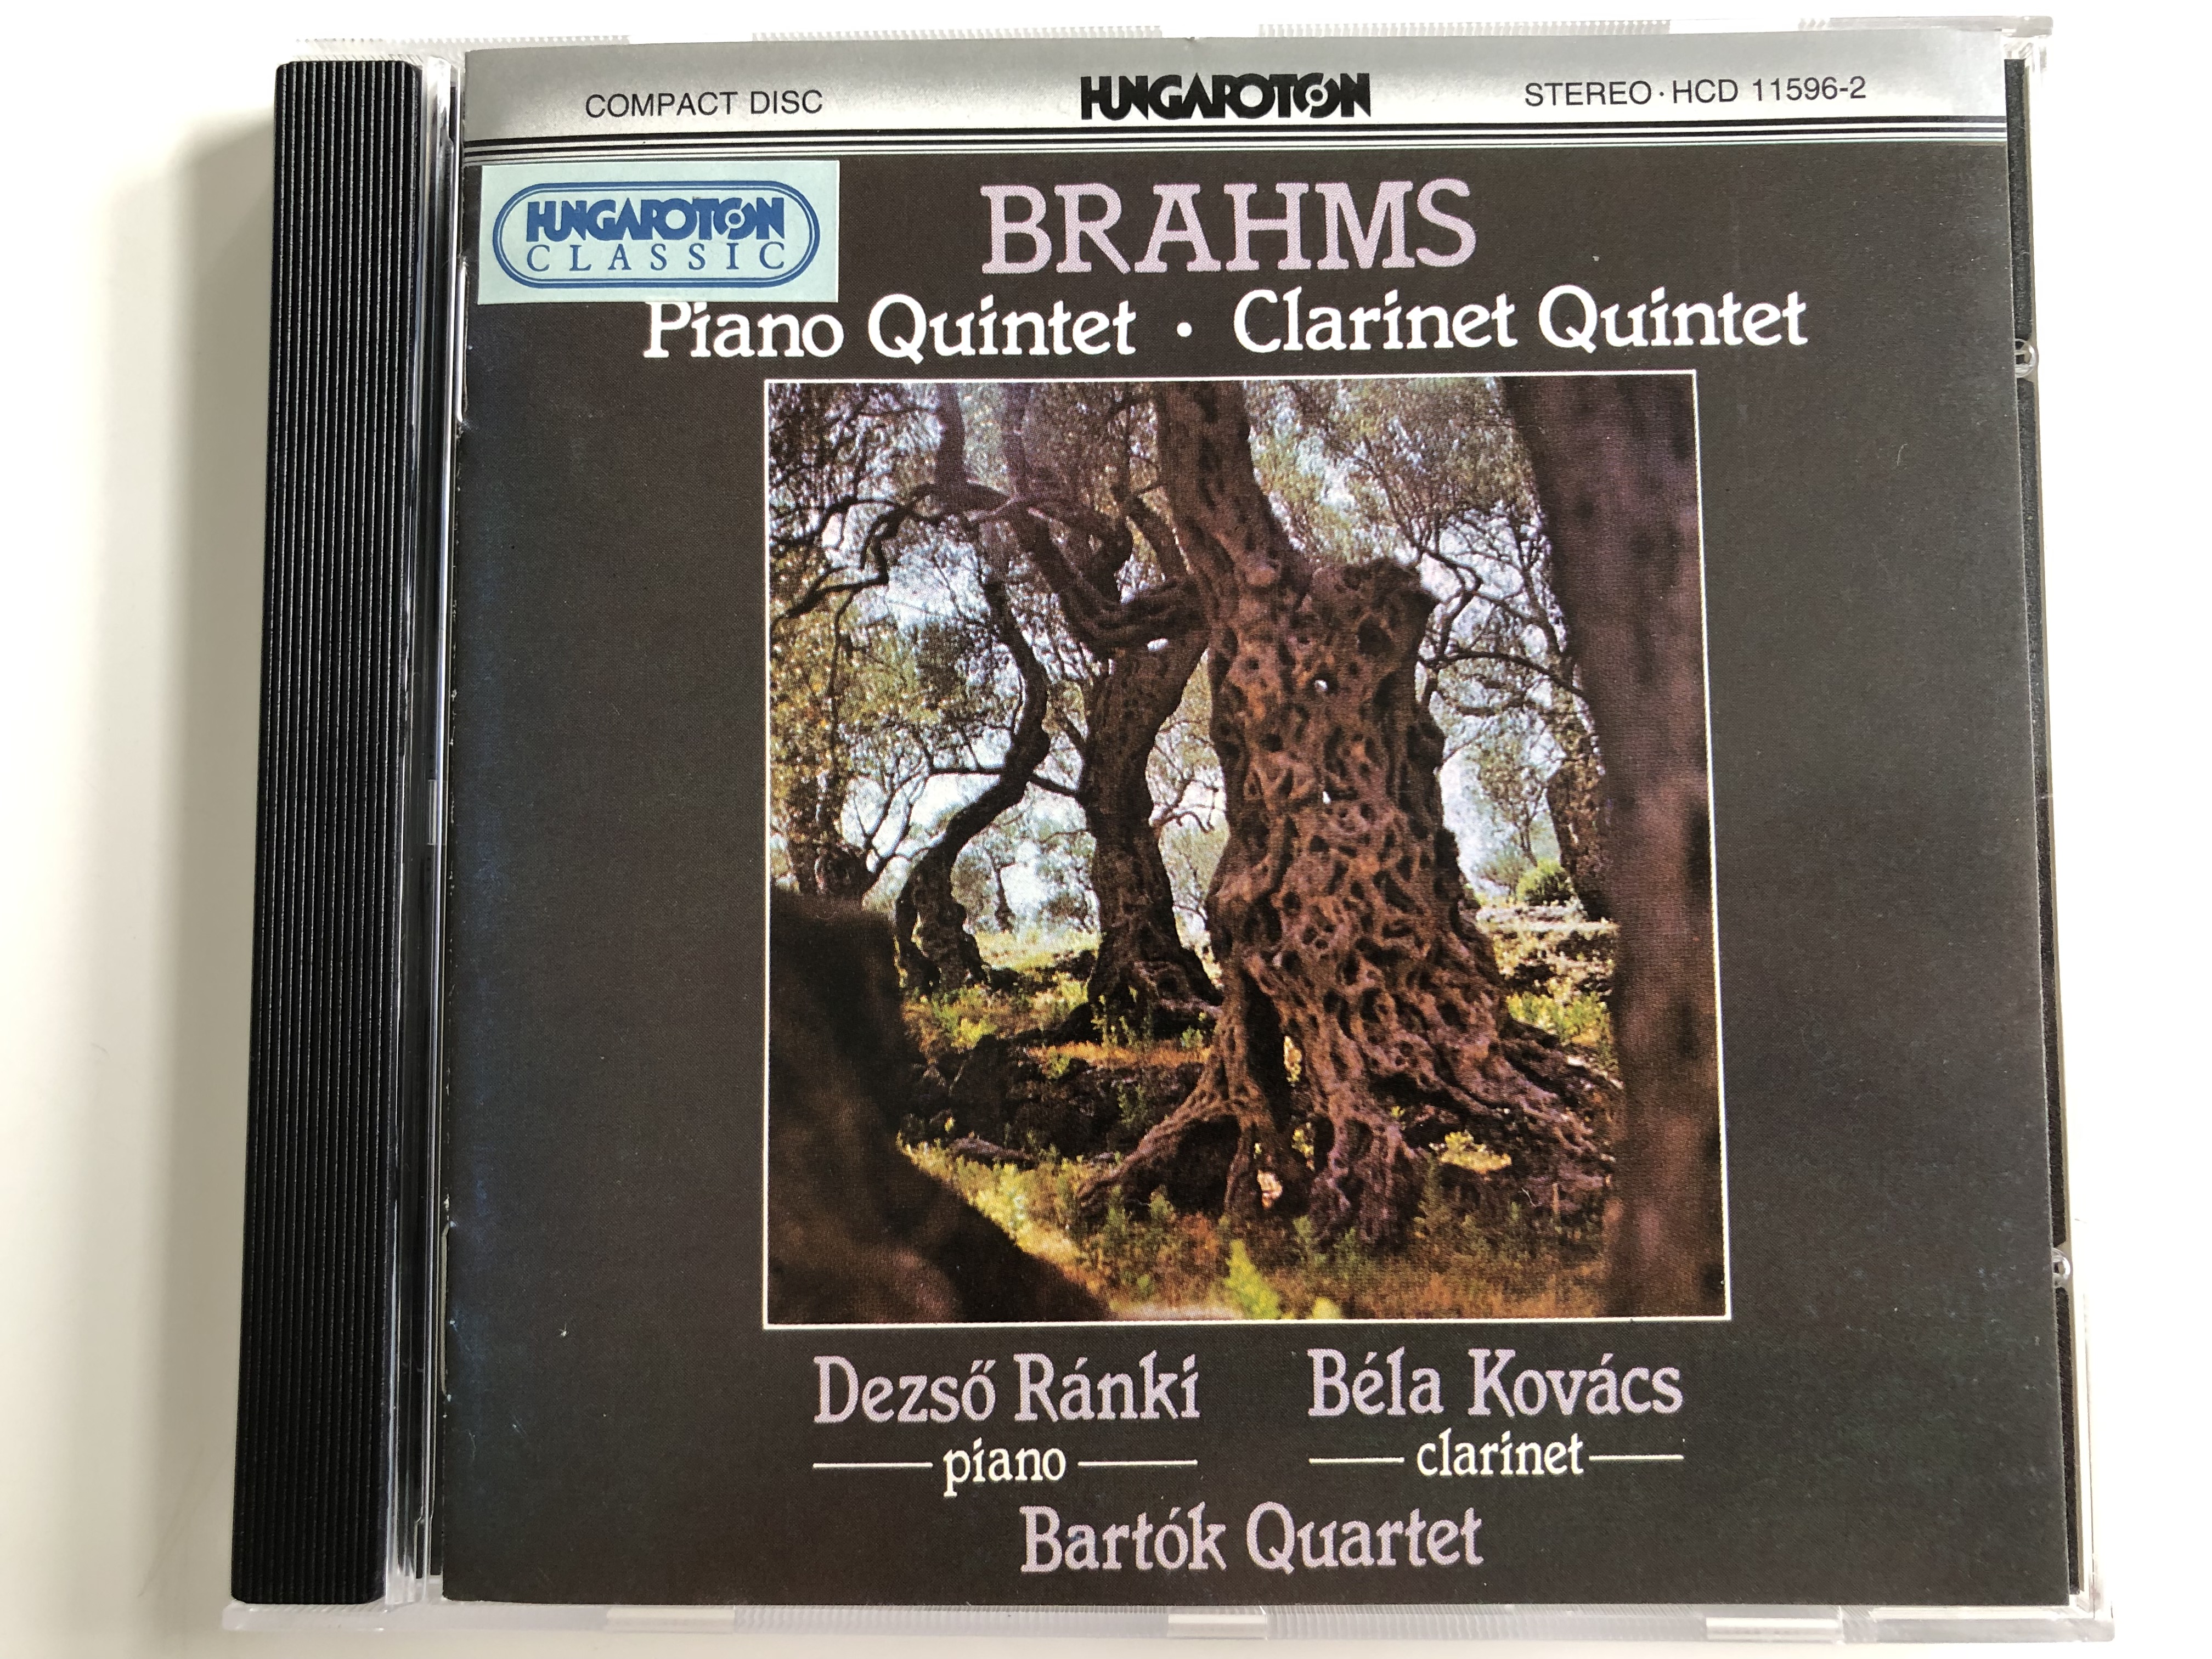 brahms-piano-quintet-clarinet-quintet-piano-dezso-ranki-clarinet-bela-kovacs-bartok-quartet-hungaroton-audio-cd-1995-stereo-hcd-11596-2-1-.jpg